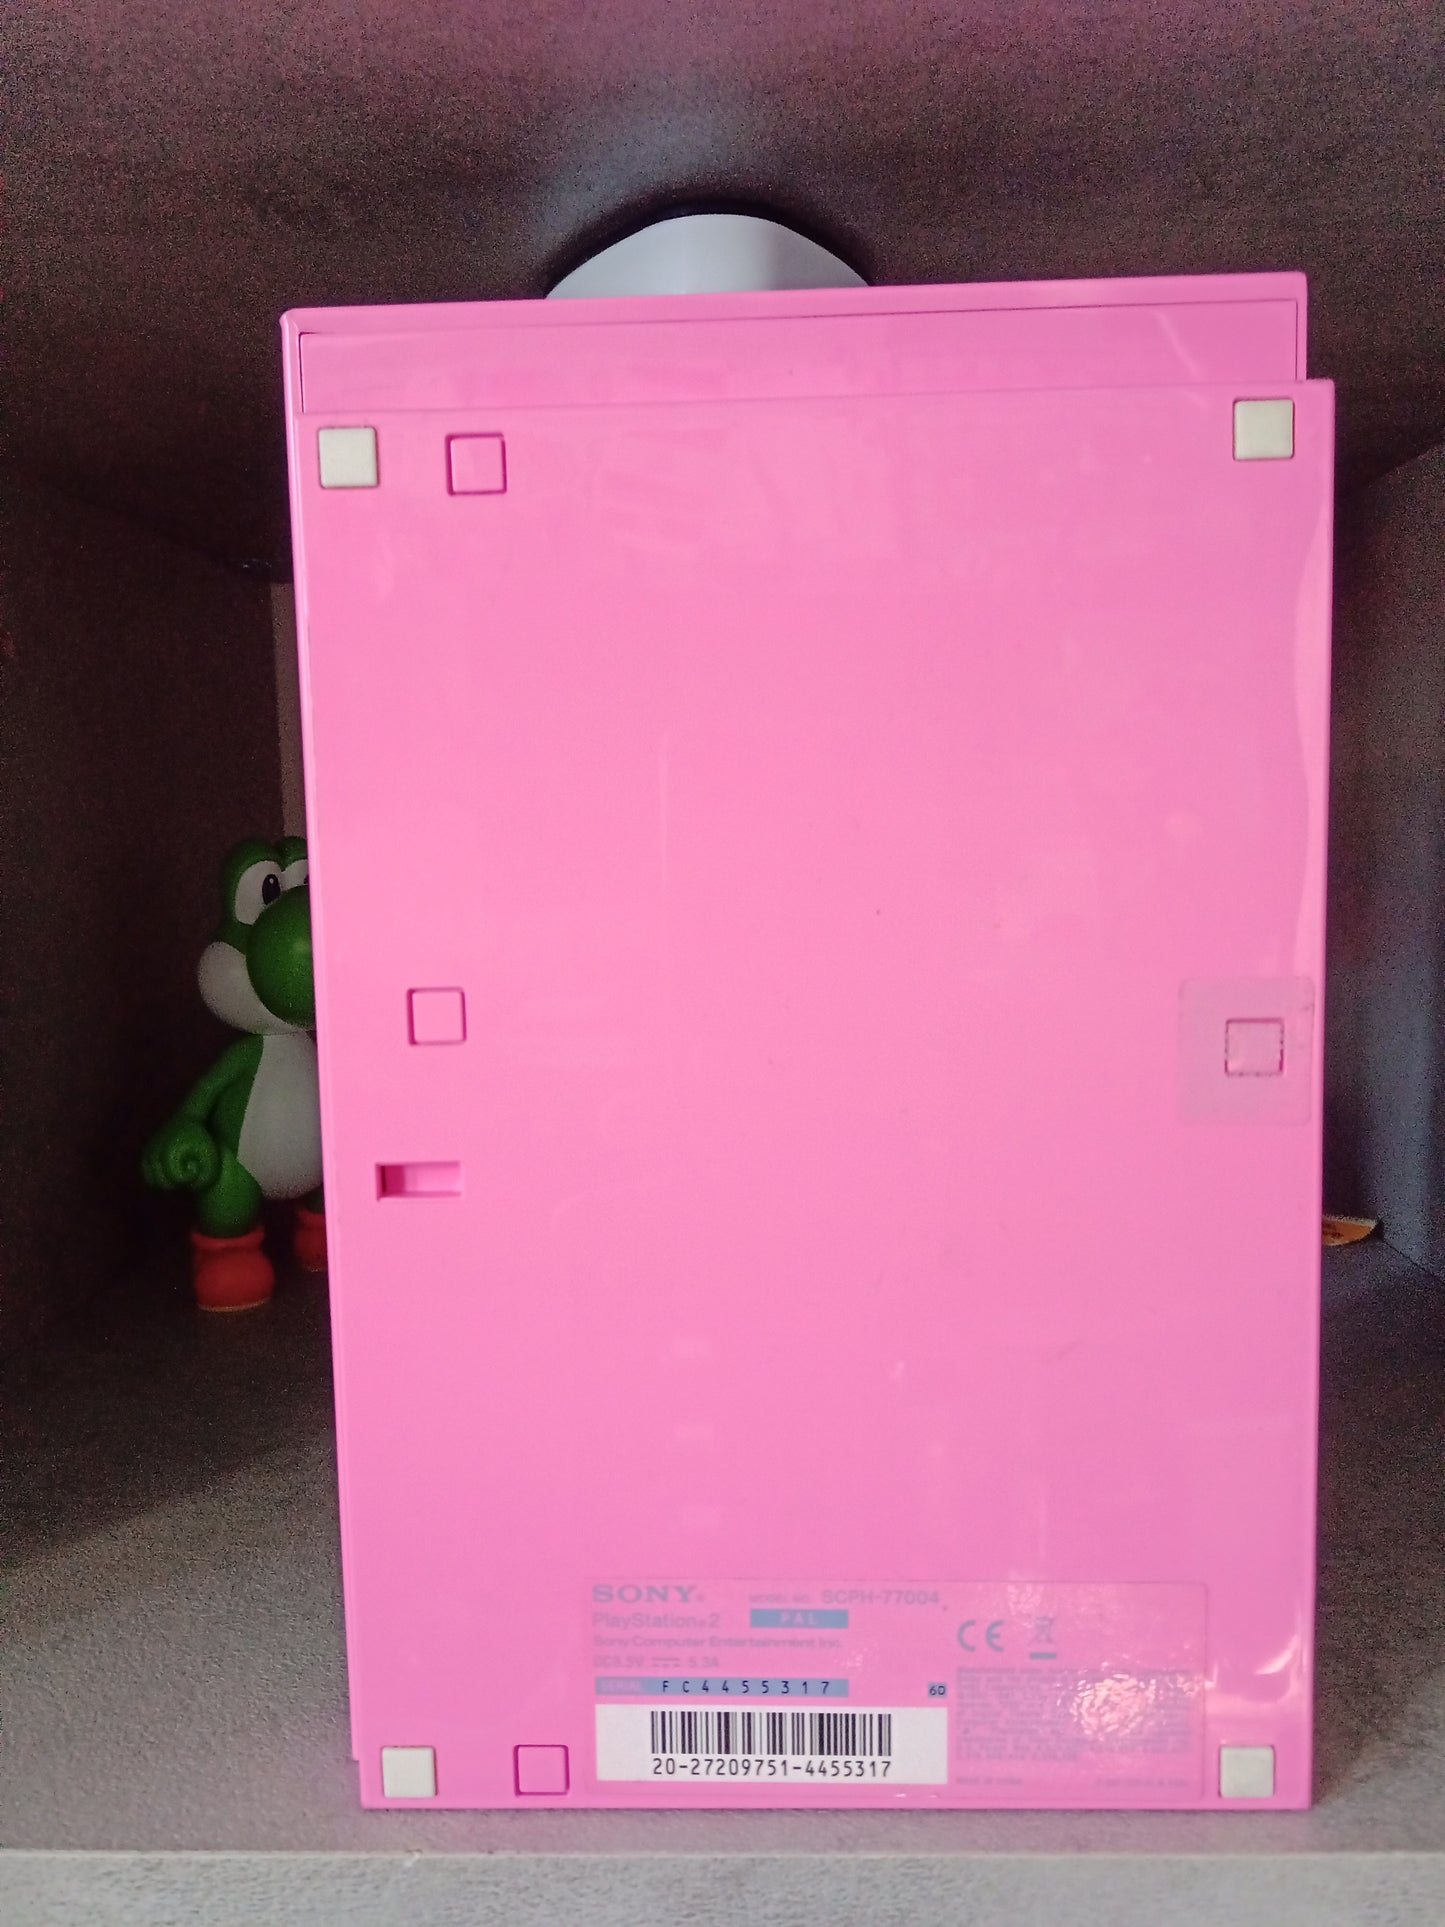 Playstation 2 Pink